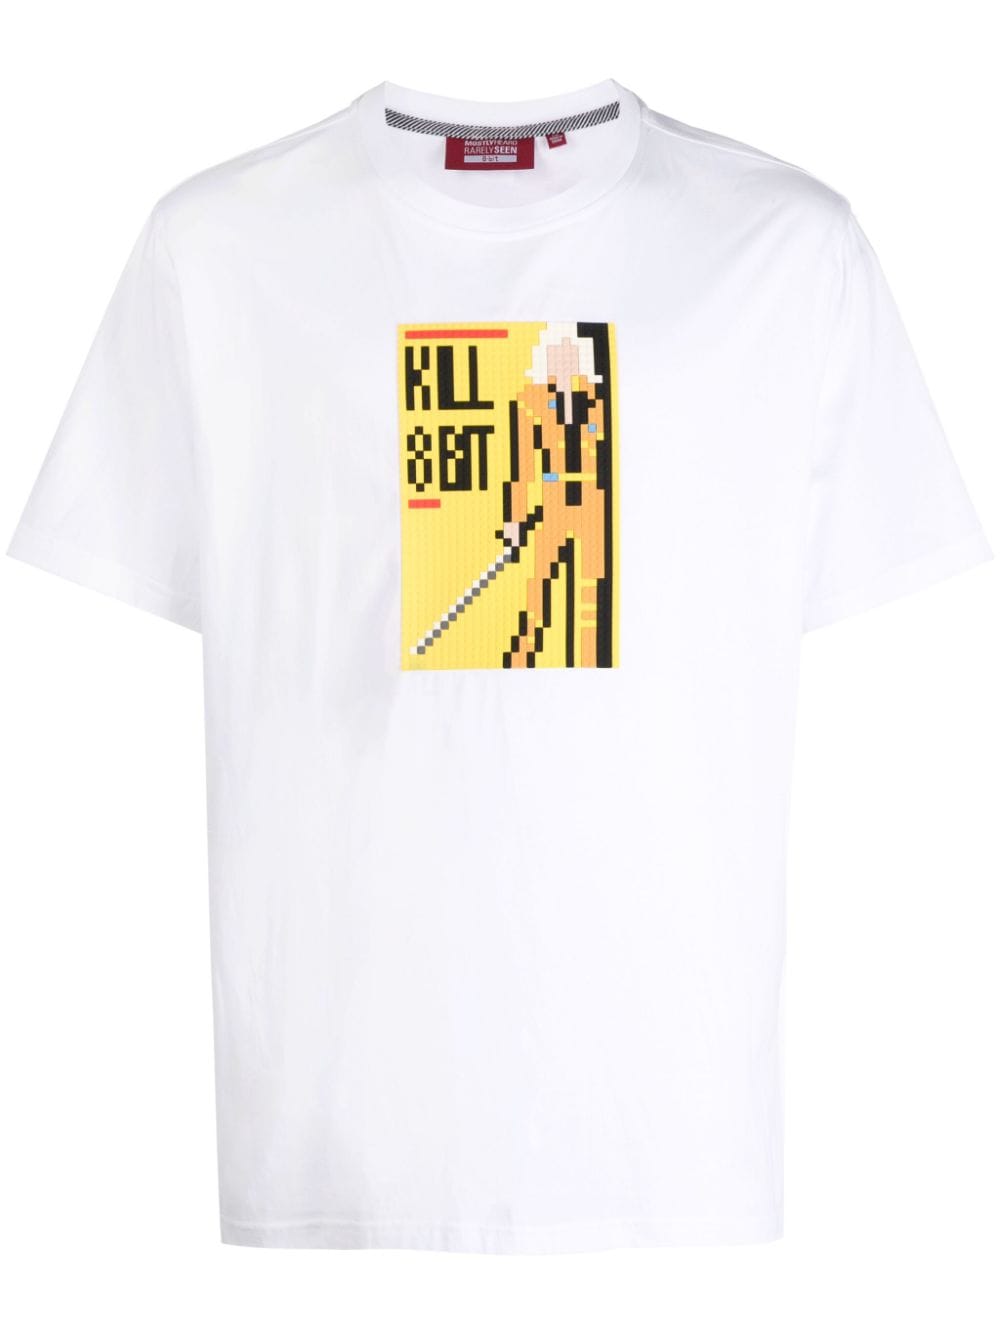 Image 1 of Mostly Heard Rarely Seen 8-Bit Kill 8Bit cotton T-shirt